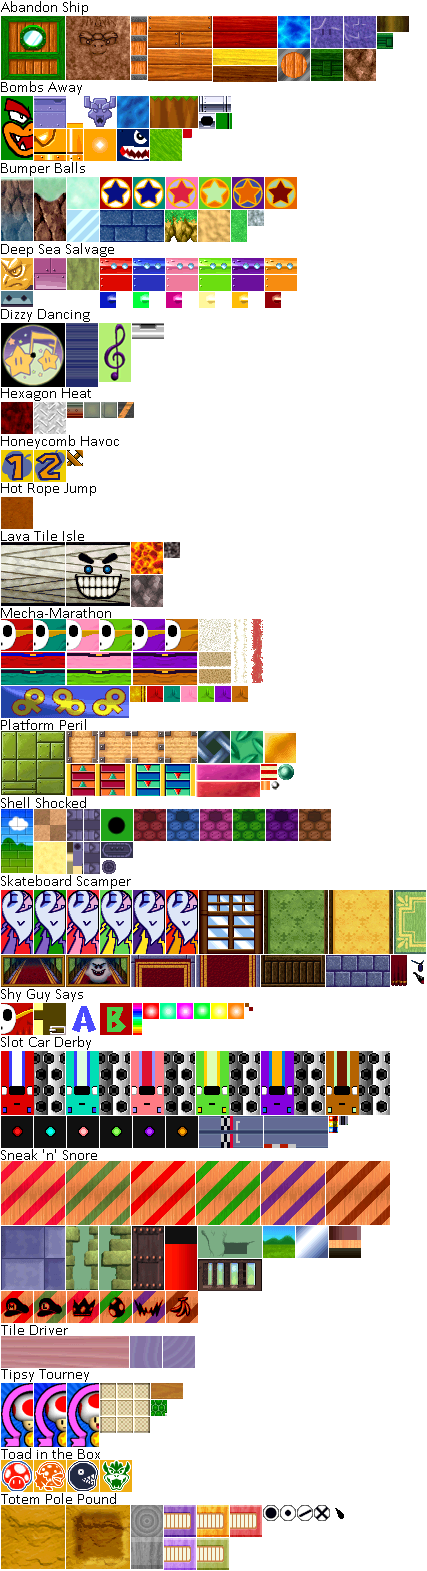 Mario Party 2 - 4-Player